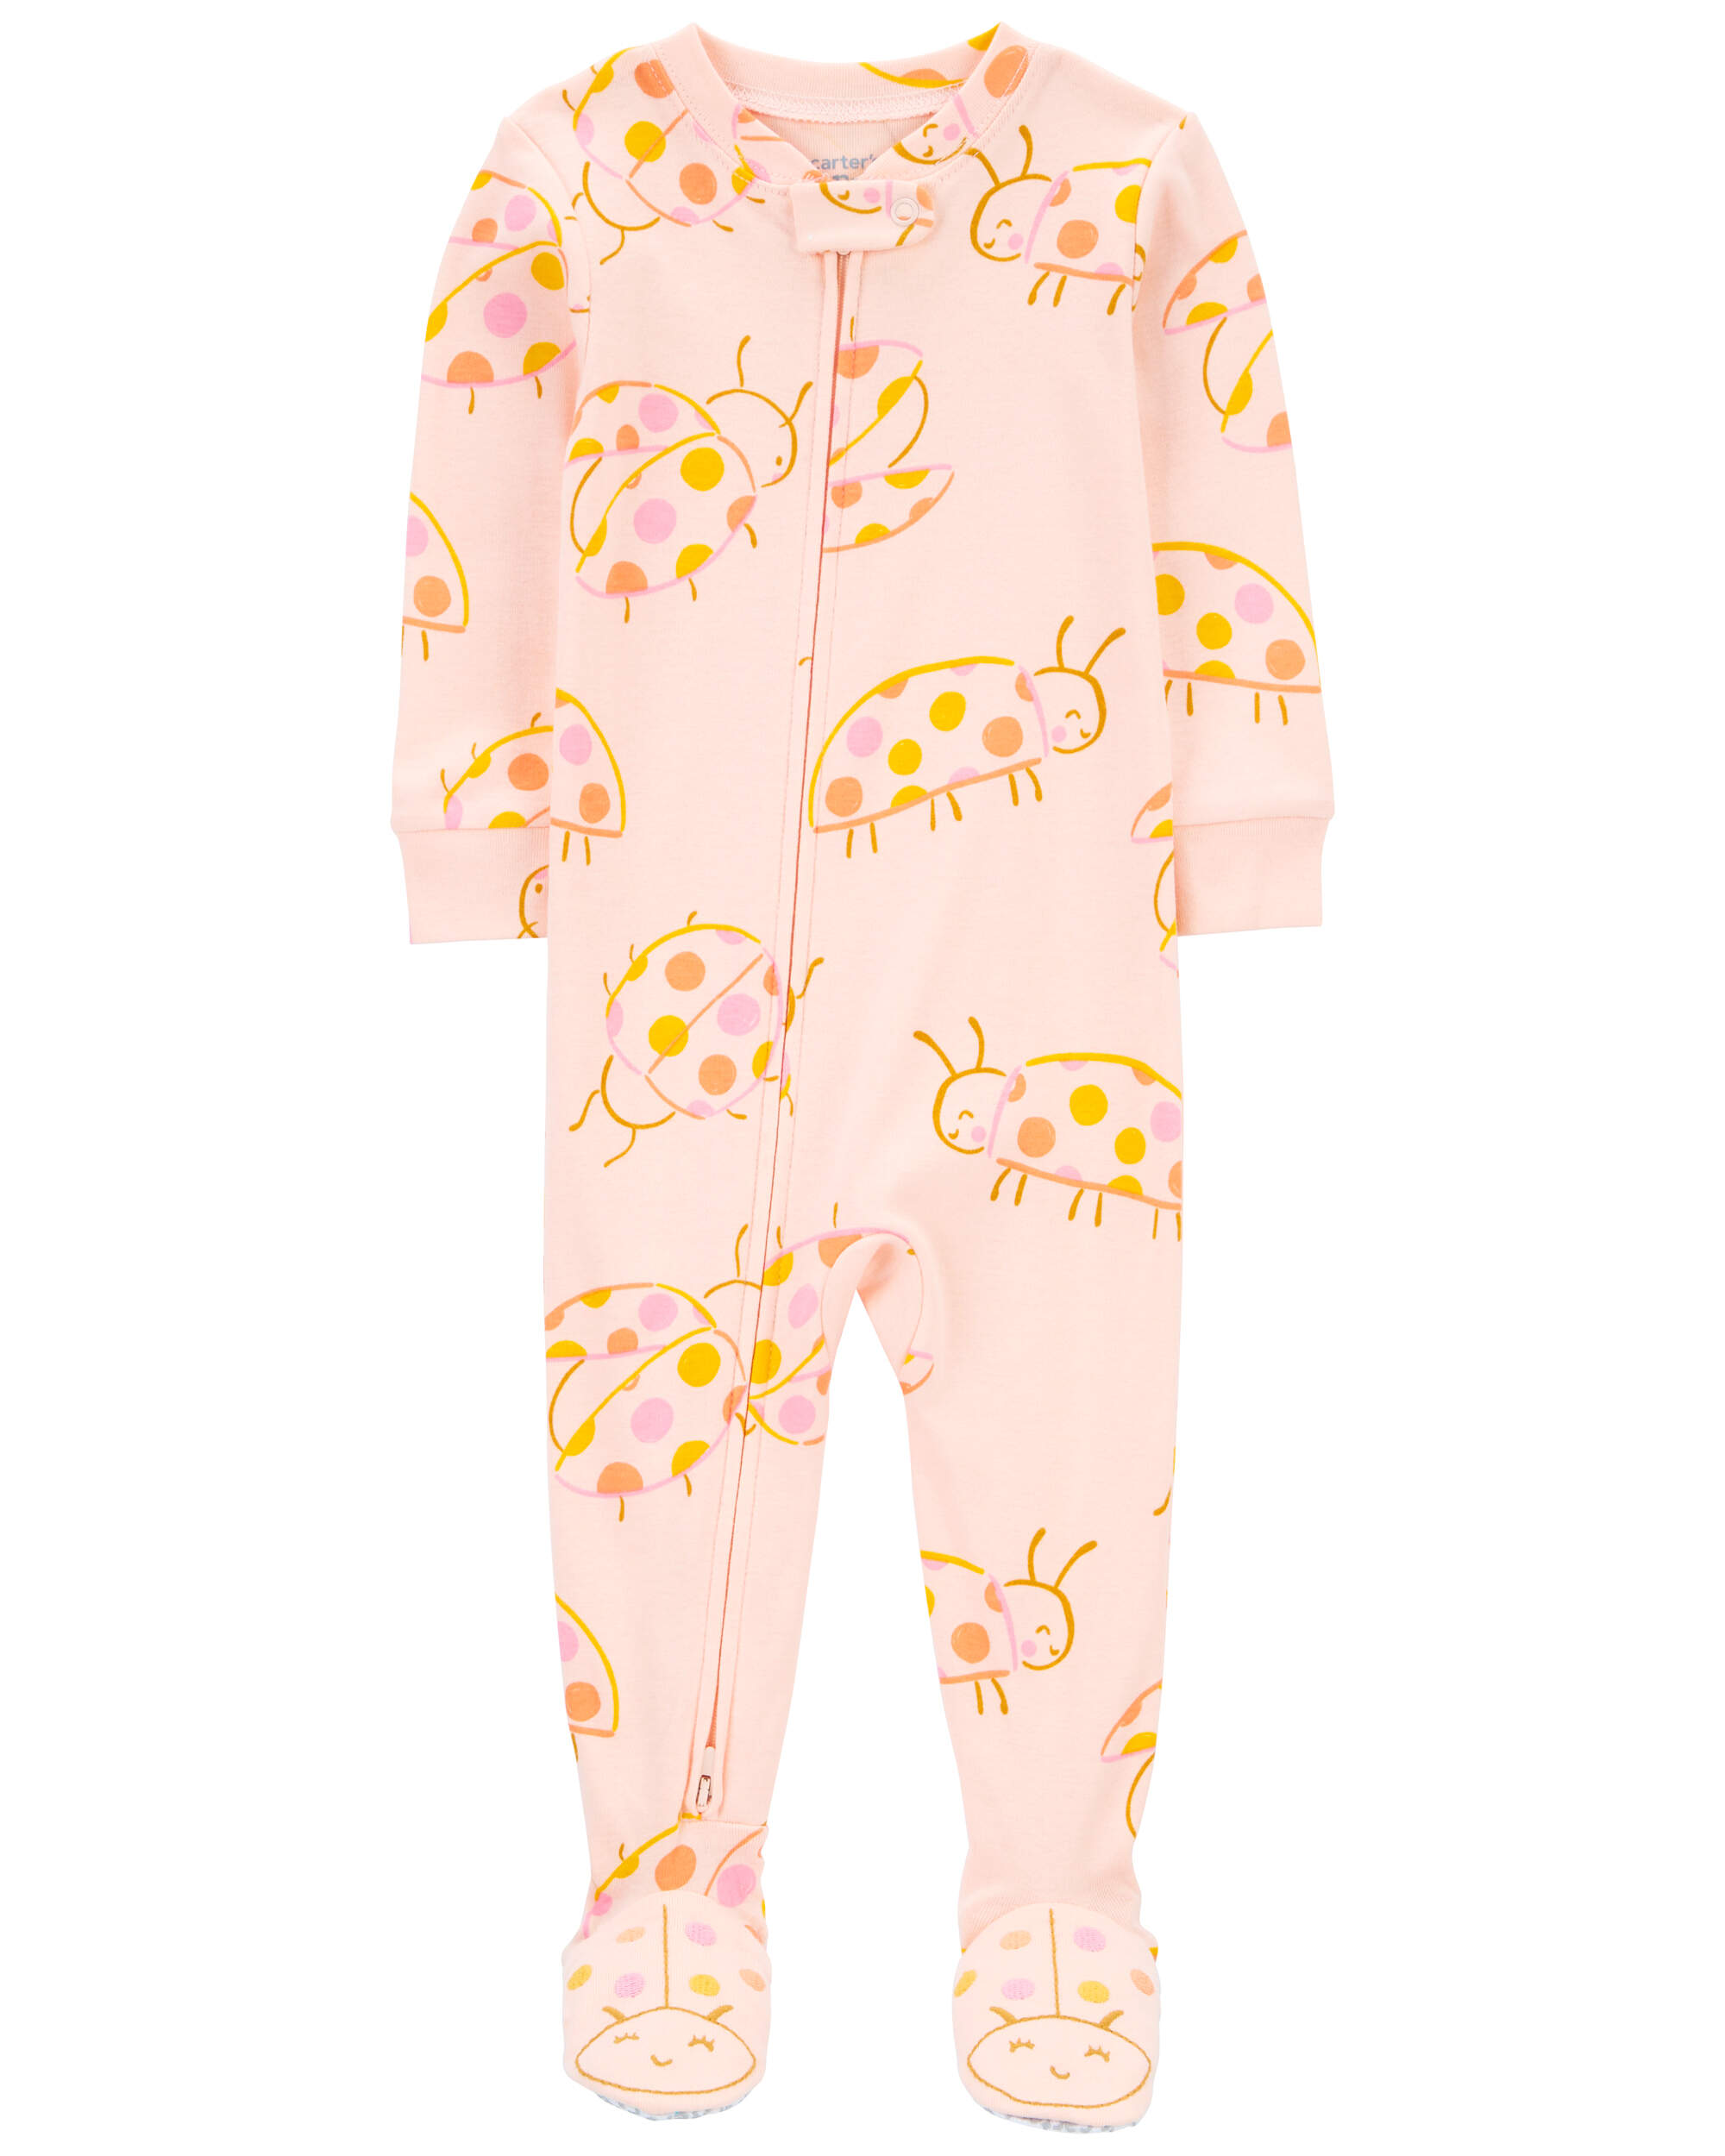 Toddler 1-Piece Ladybug 100% Snug Fit Cotton Footie Pyjamas